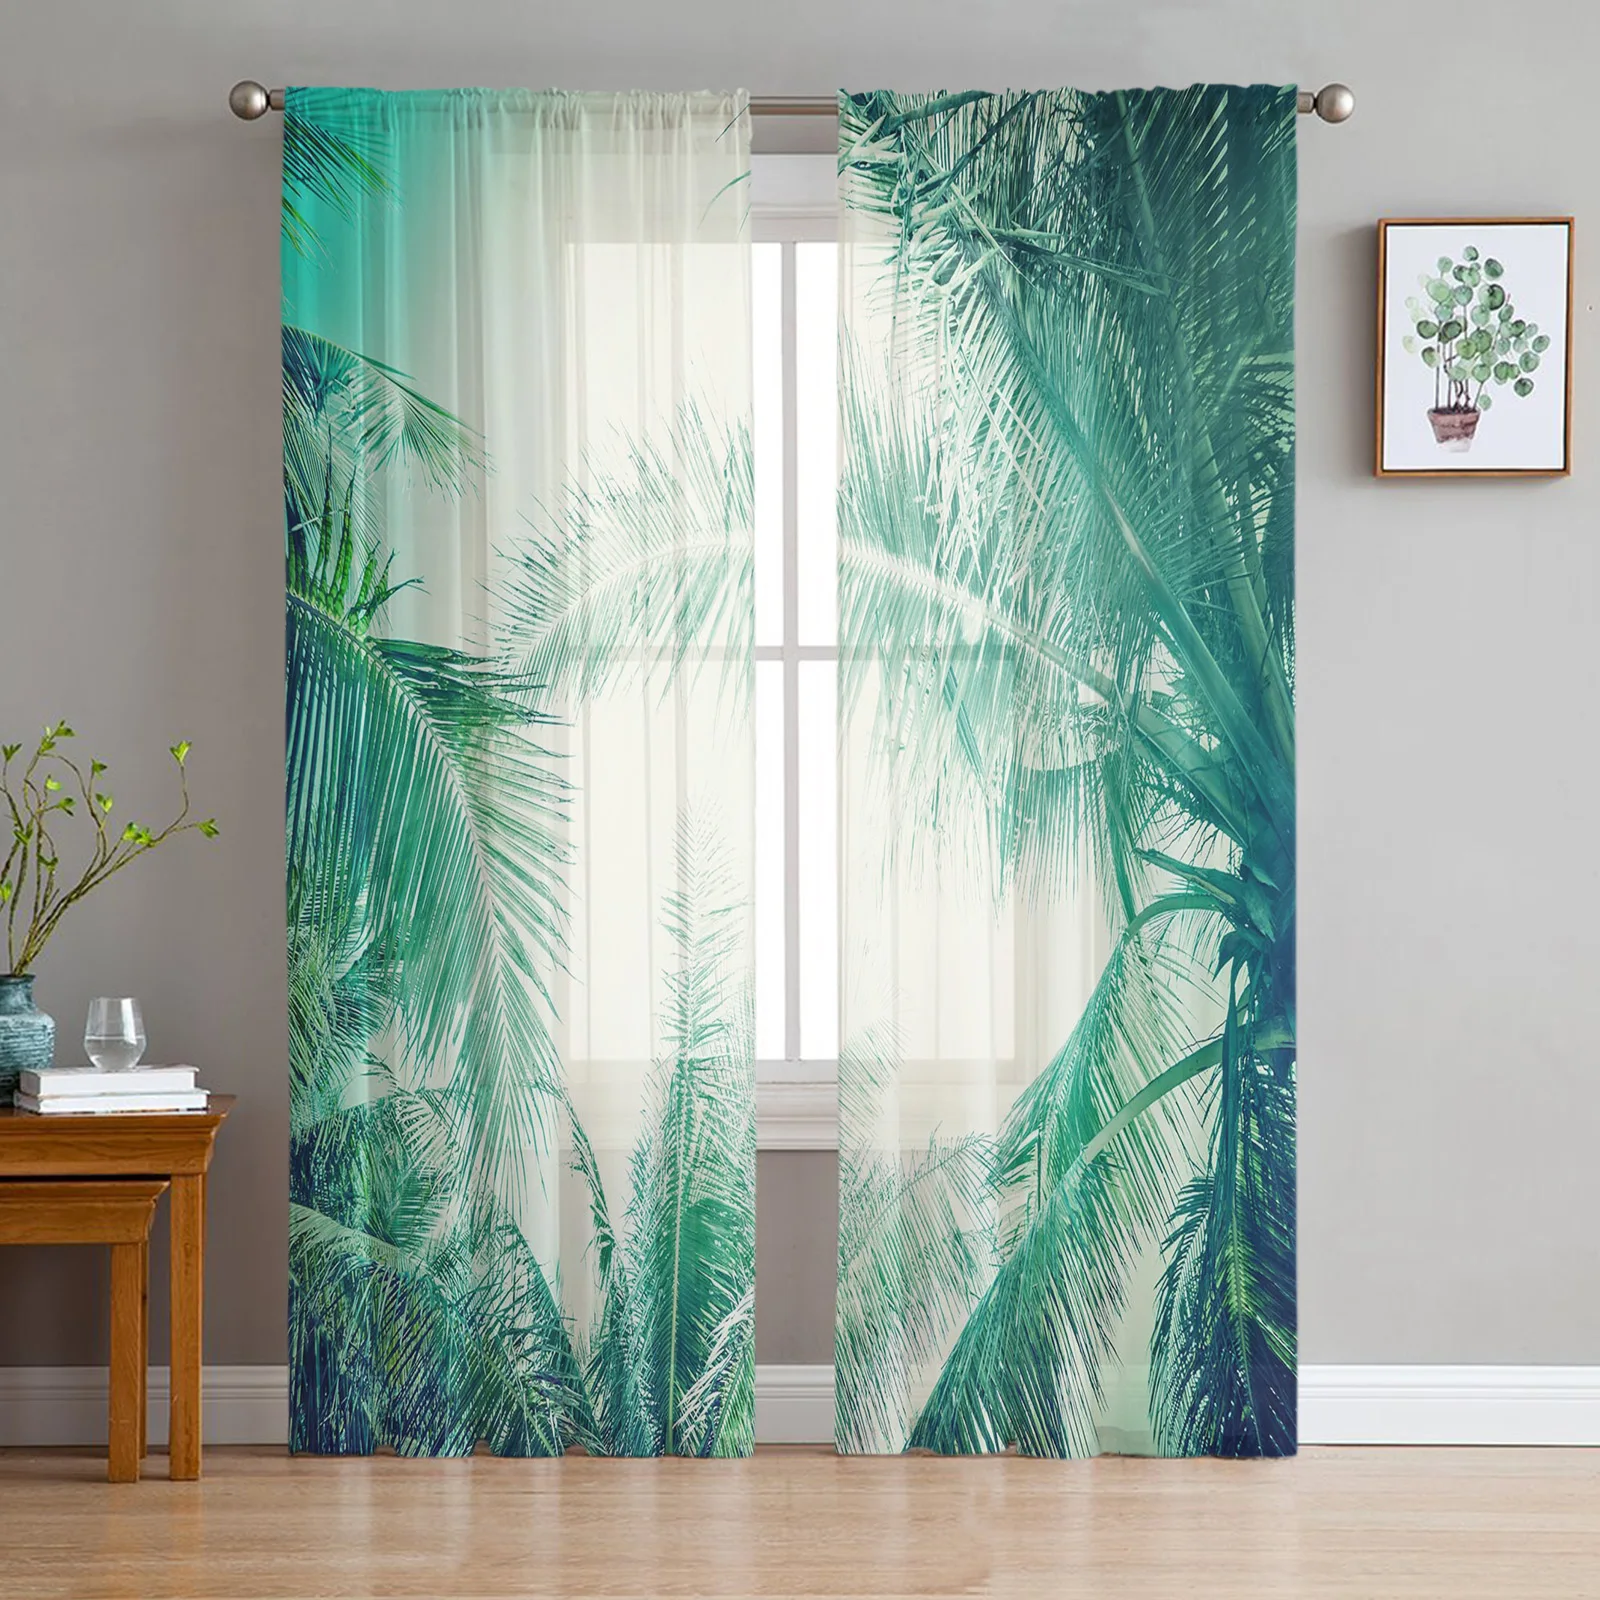 Cortinas de tul modernas para sala de estar, visillo transparente de hojas verdes, planta de jungla, naturaleza, tratamientos decorativos para ventana de dormitorio